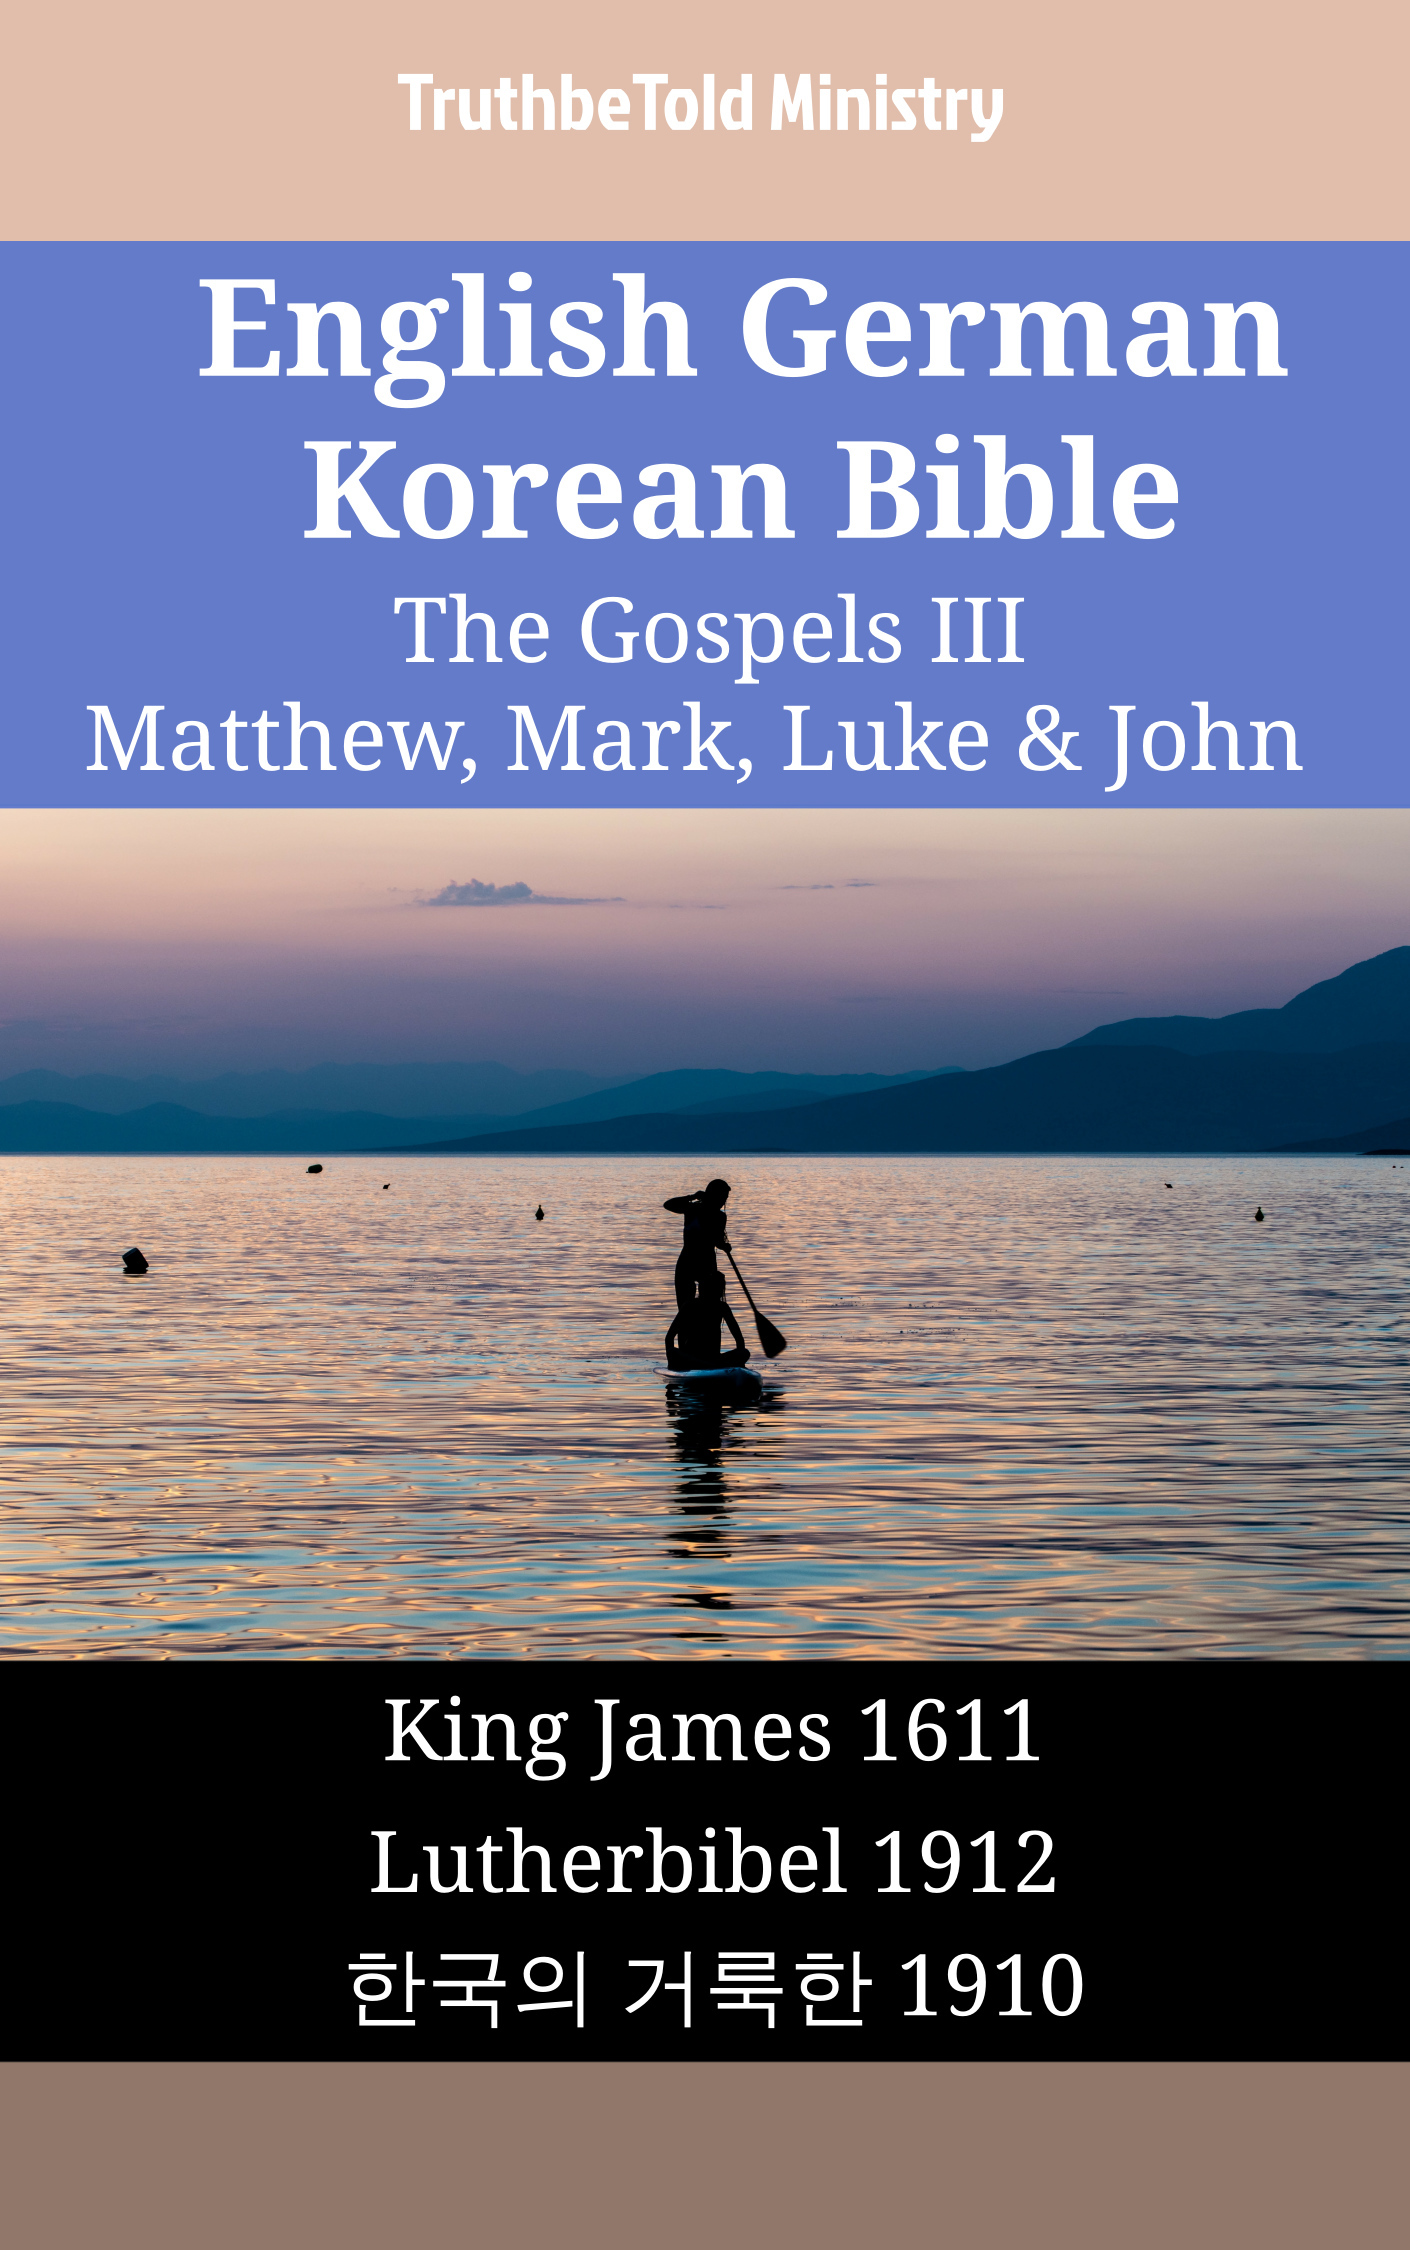 English German Korean Bible - The Gospels III - Matthew, Mark, Luke & John